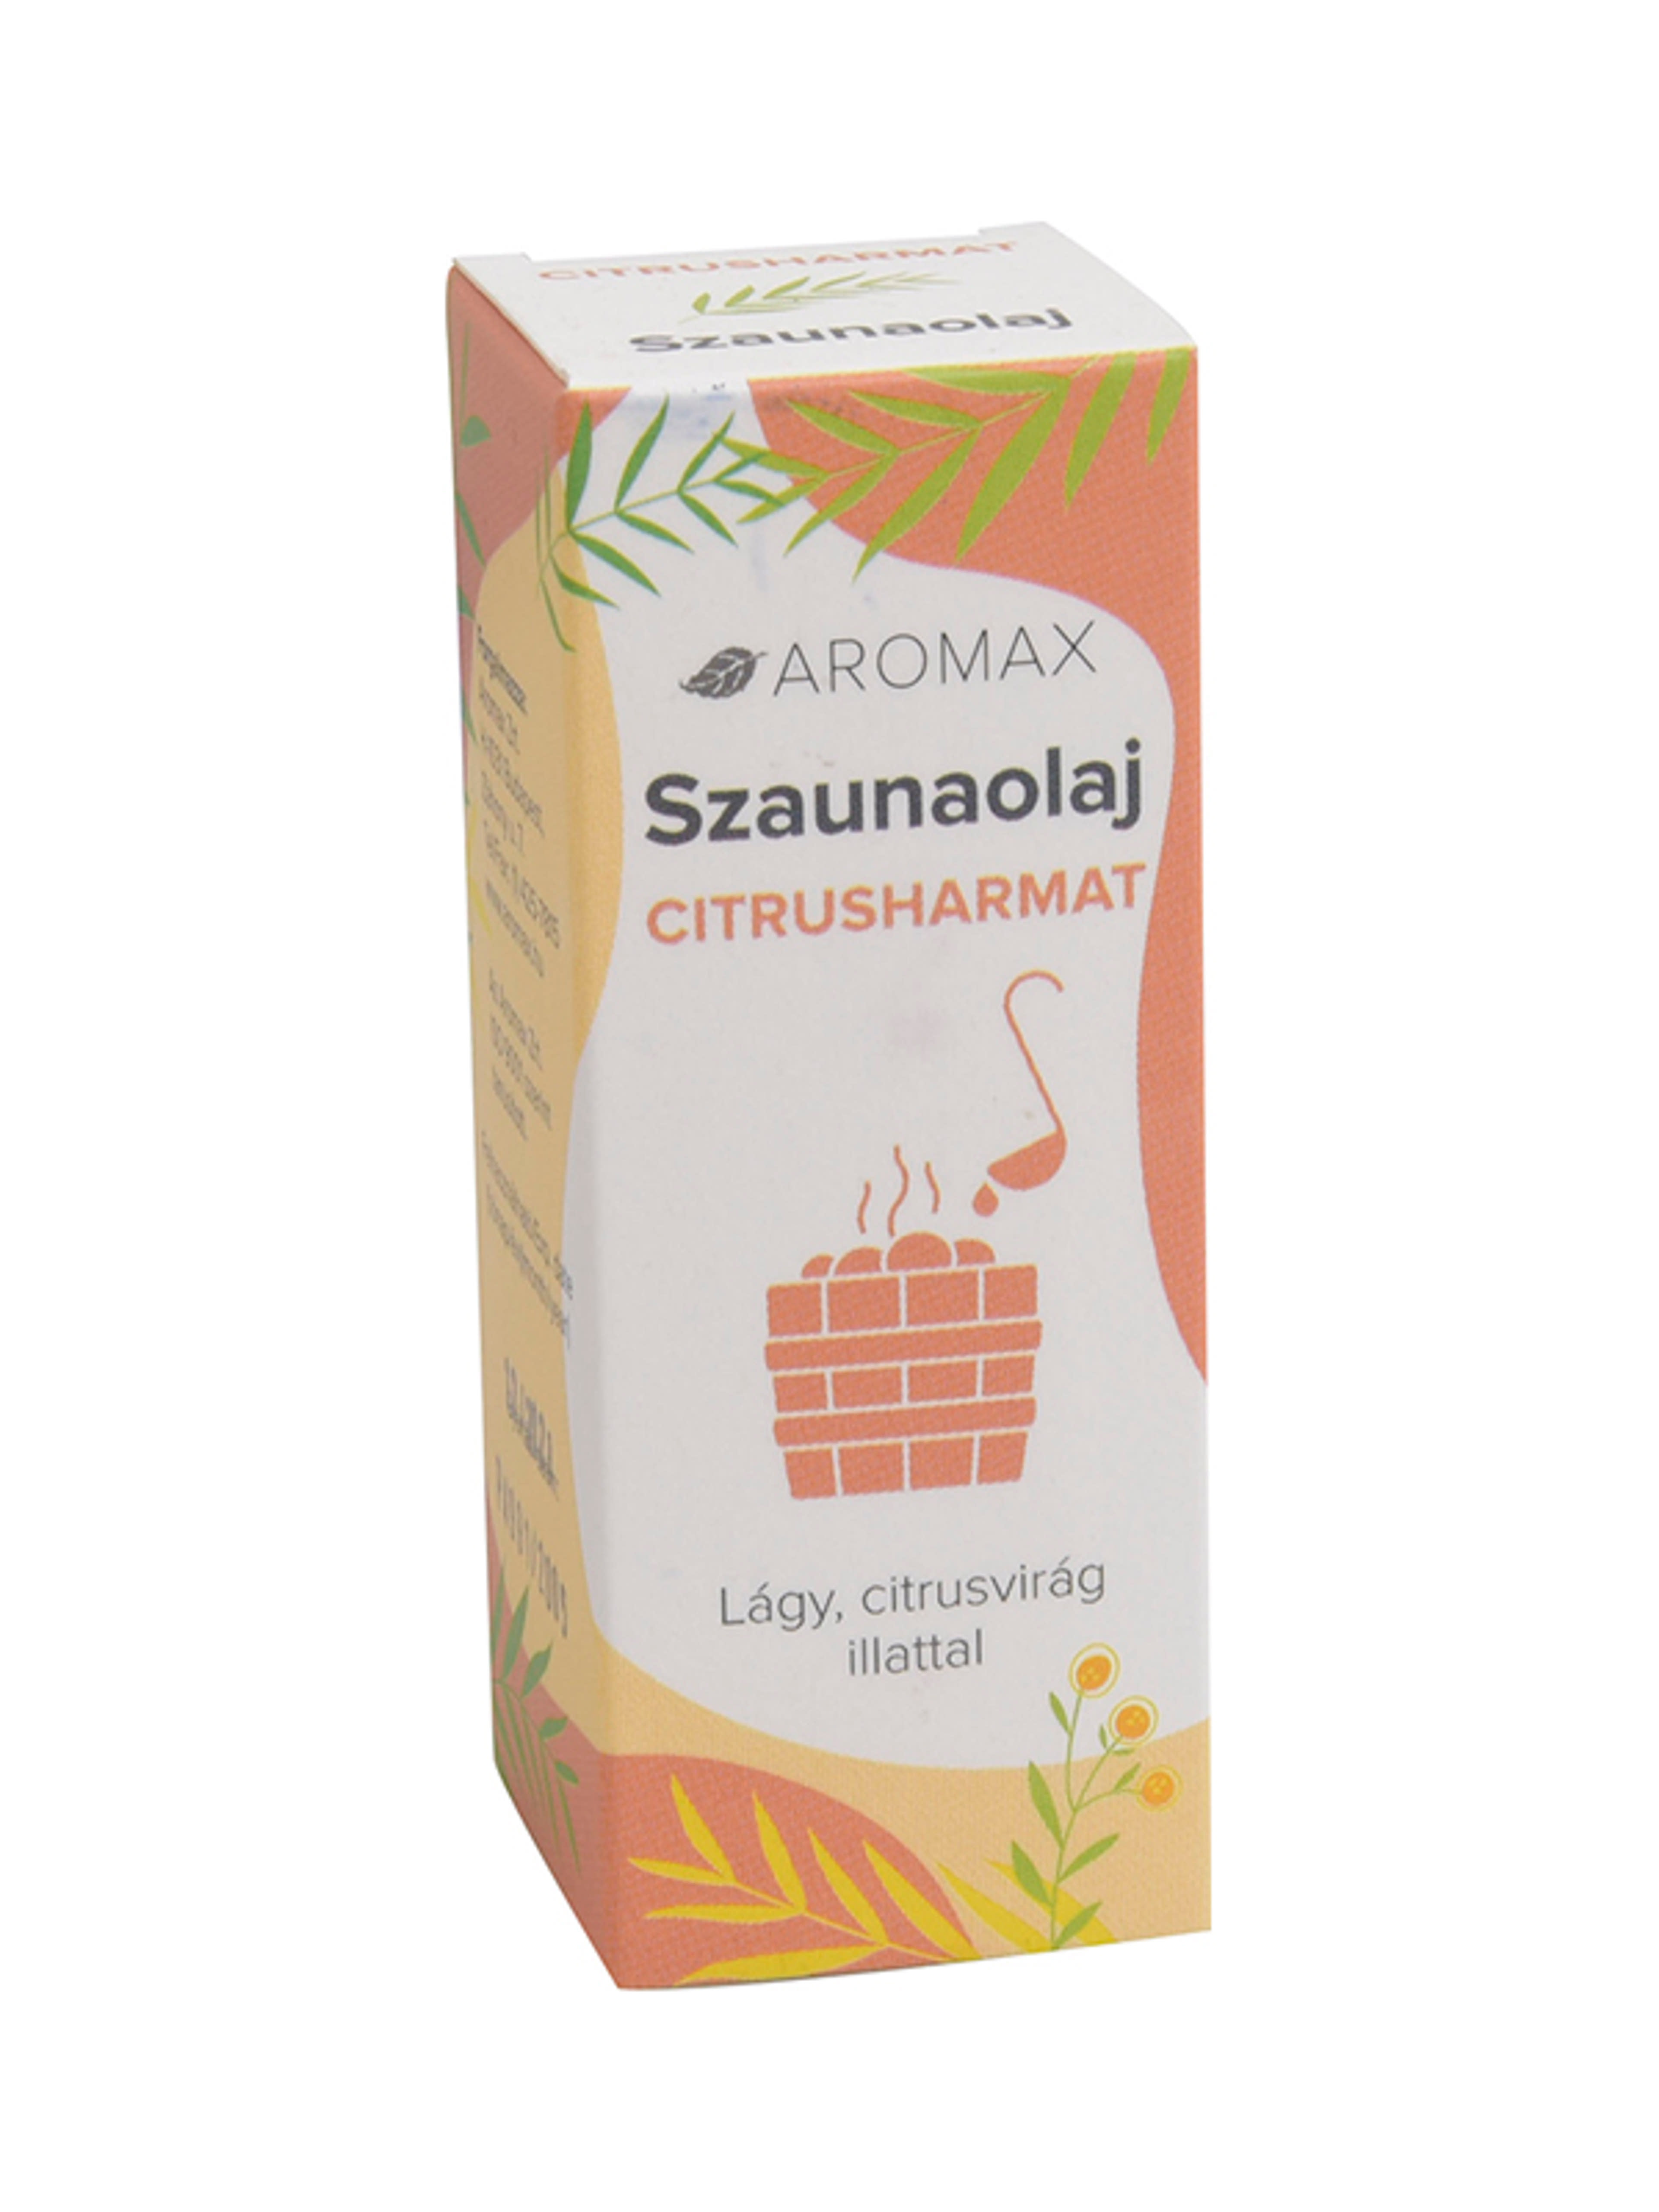 Aromax szaunaolaj citrusharmat - 20 ml-1